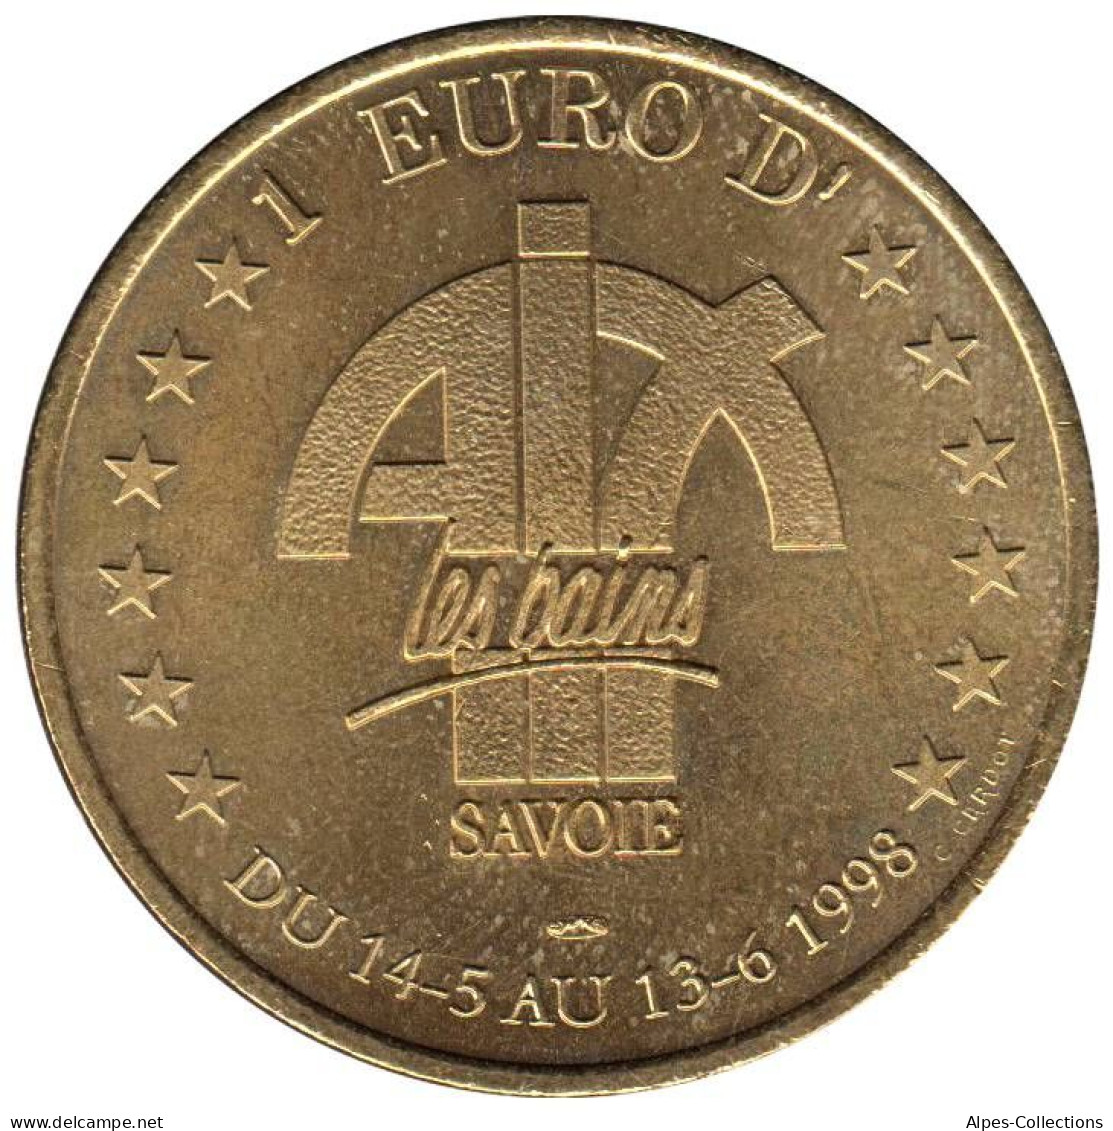 AIX LES BAINS - EU0010.2 - 1 EURO DES VILLES - Réf: T418 - 1998 - Euro Van De Steden